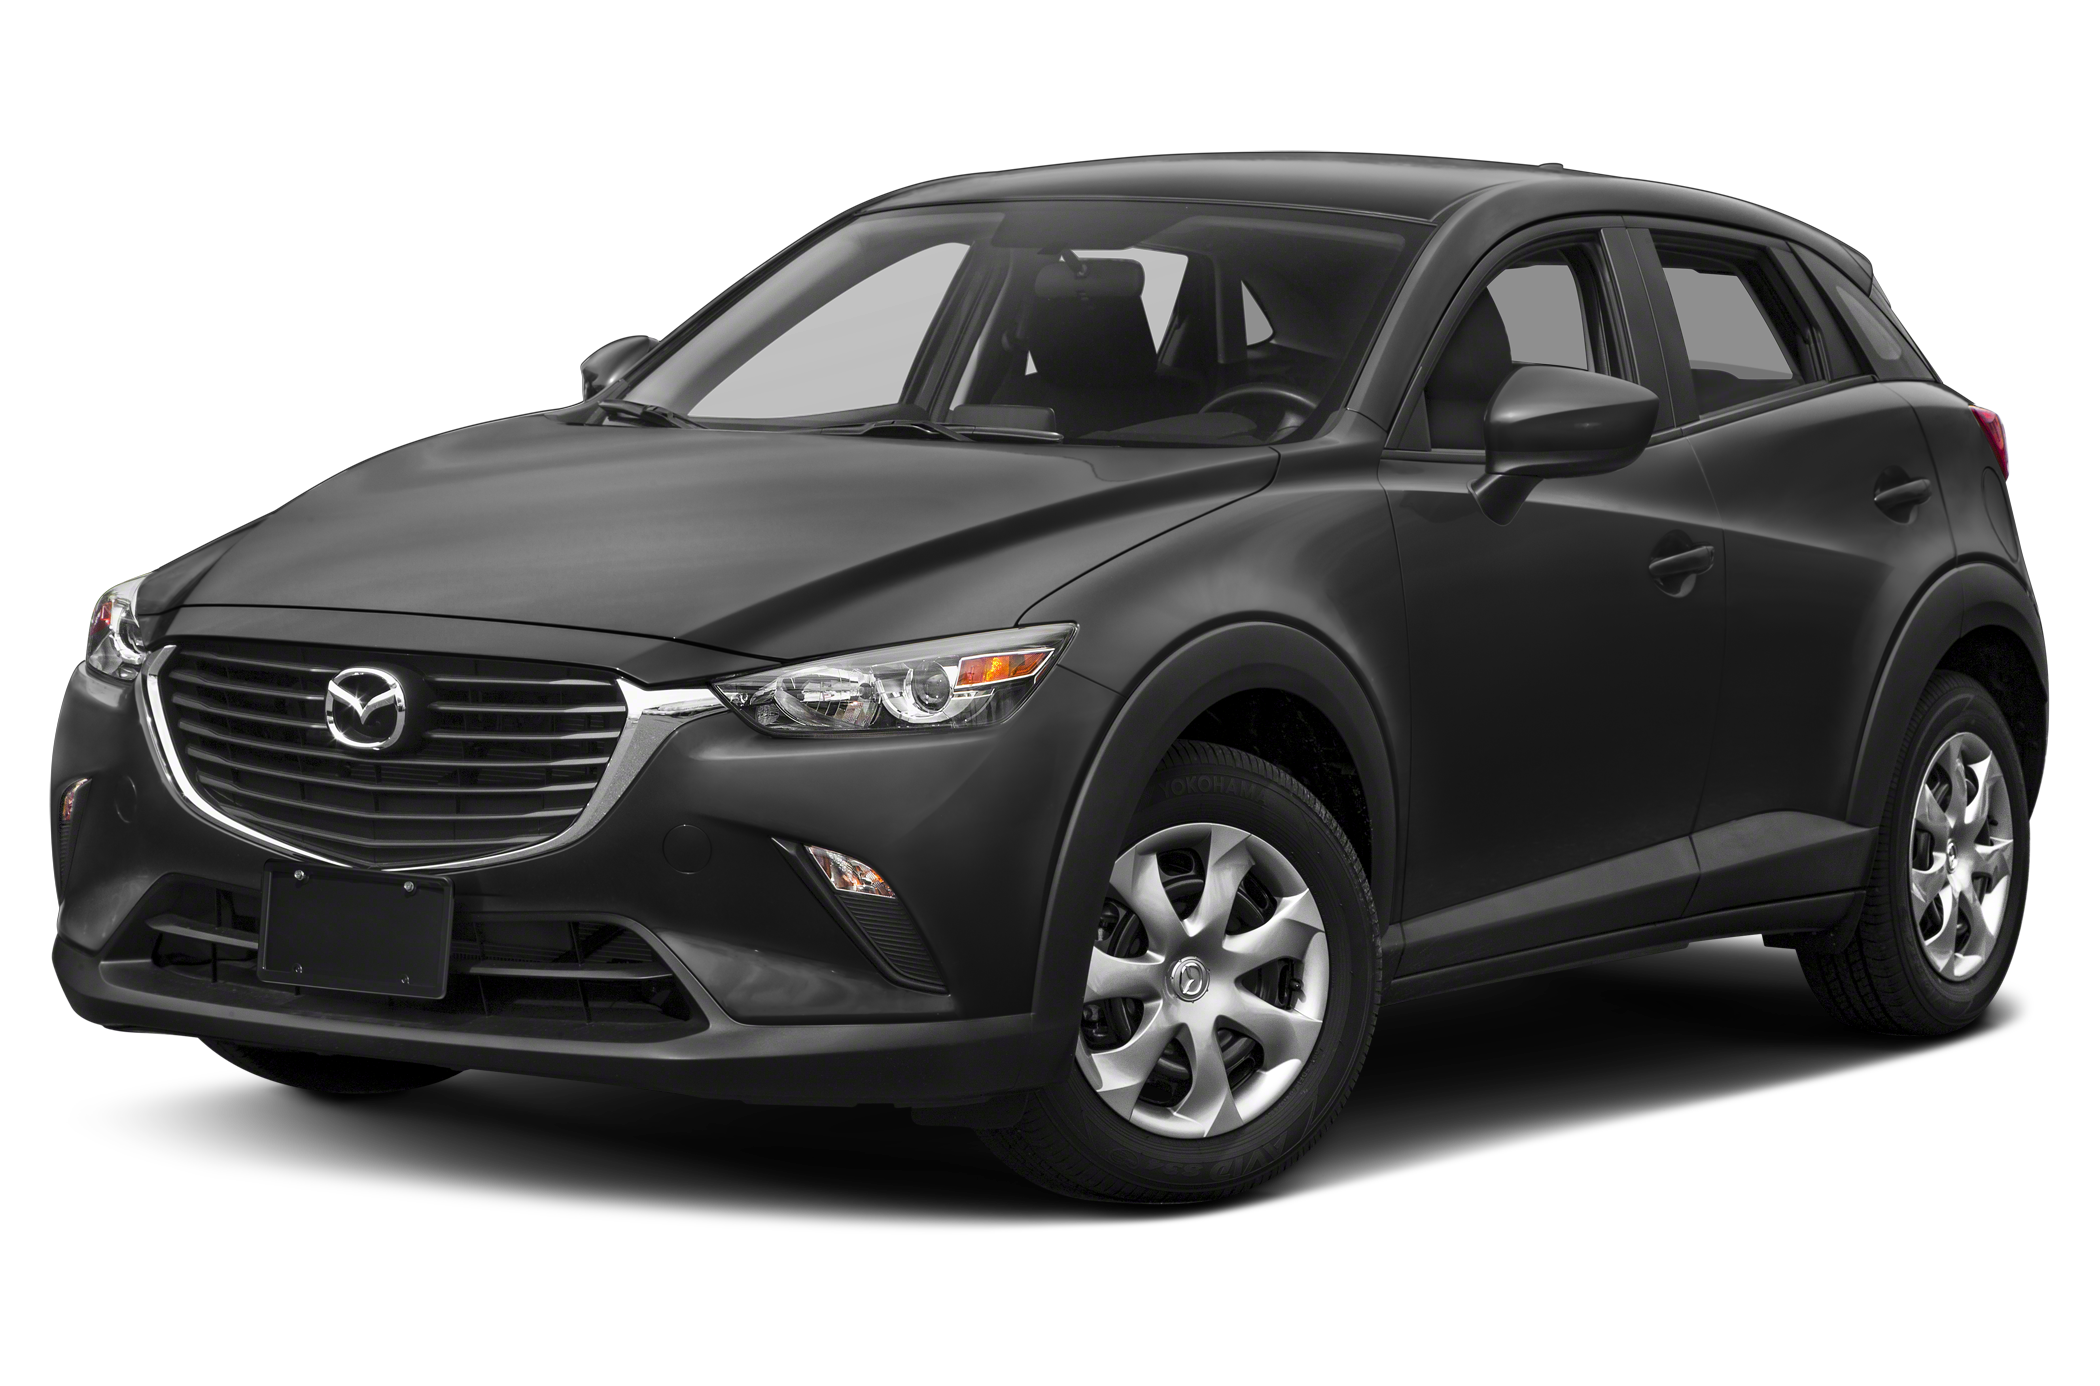 2016 Mazda CX3 View Specs, Prices & Photos WHEELS.ca